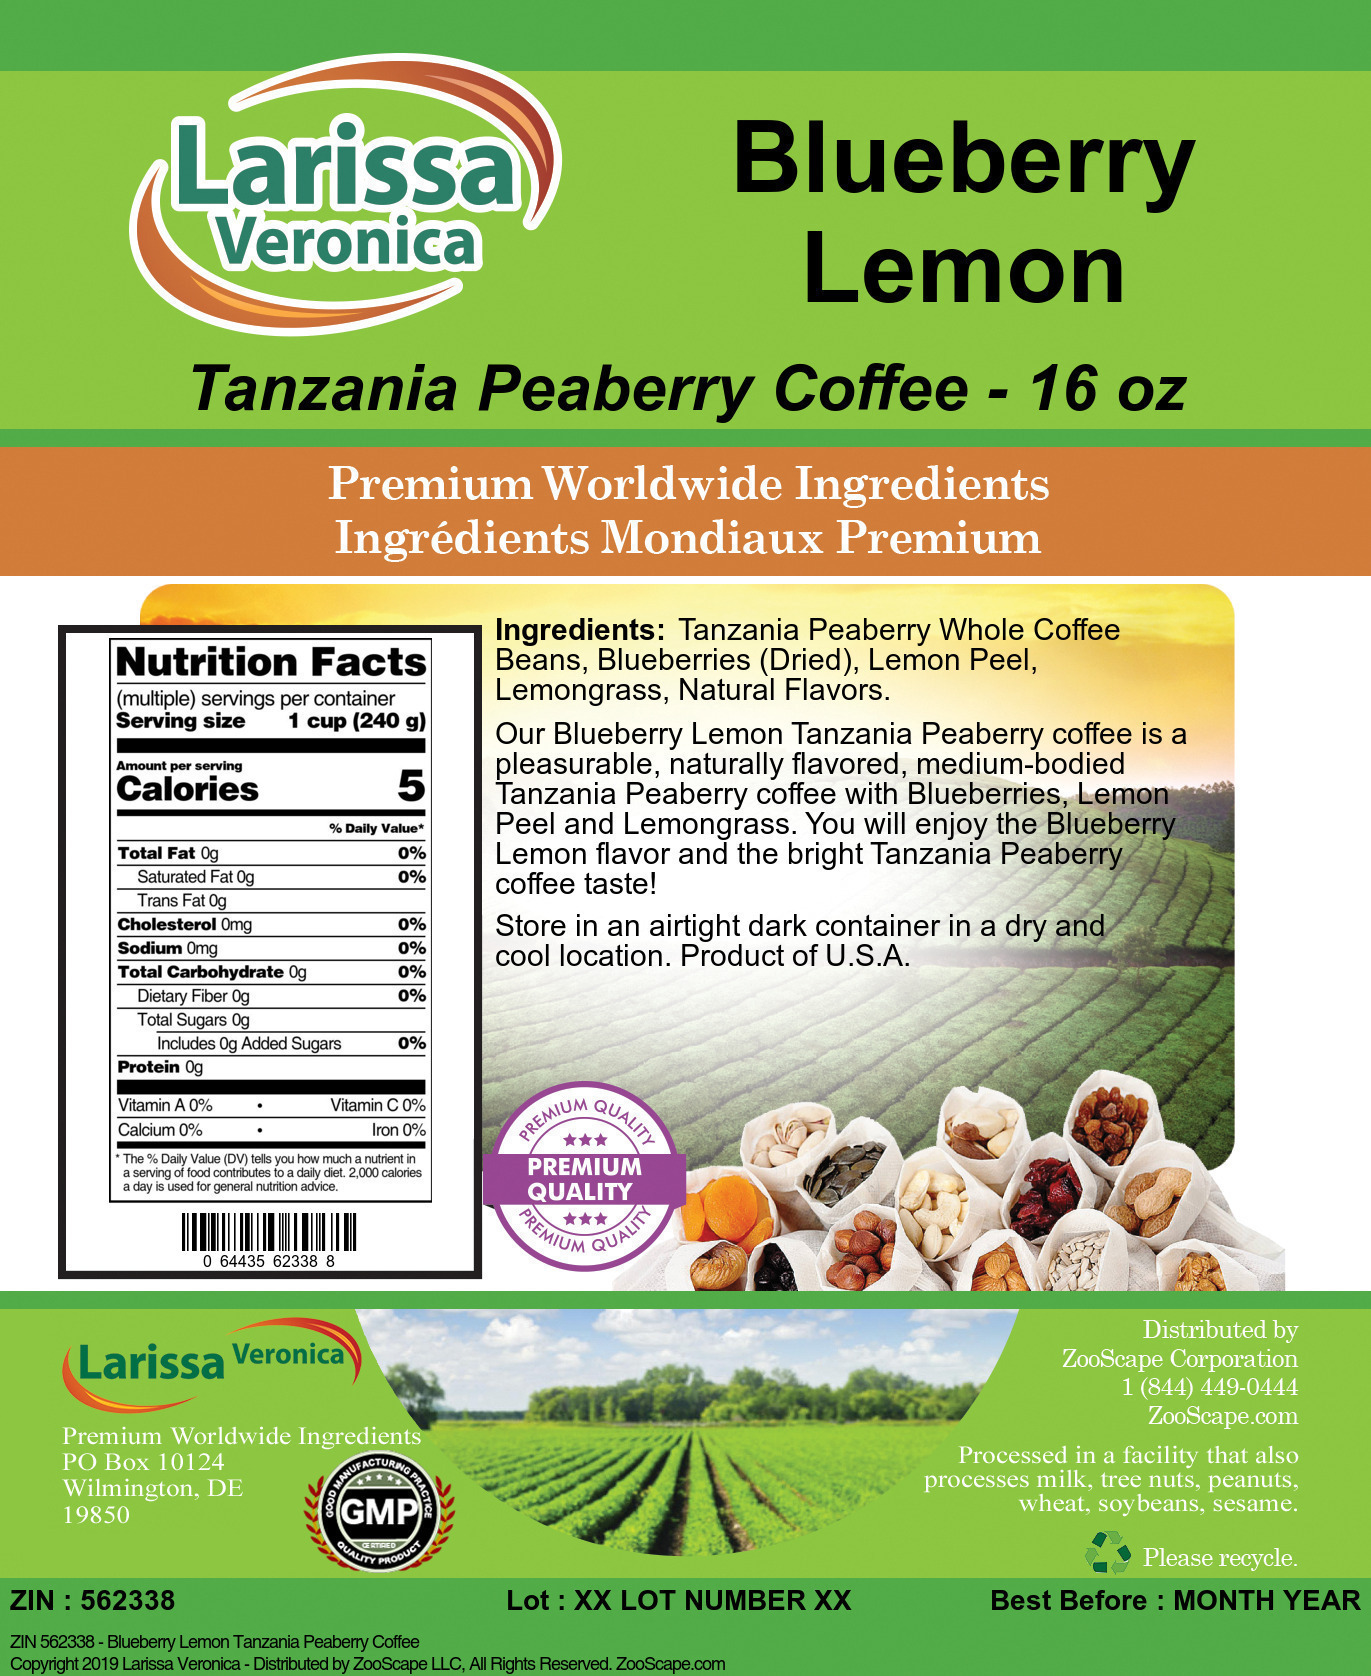 Blueberry Lemon Tanzania Peaberry Coffee - Label